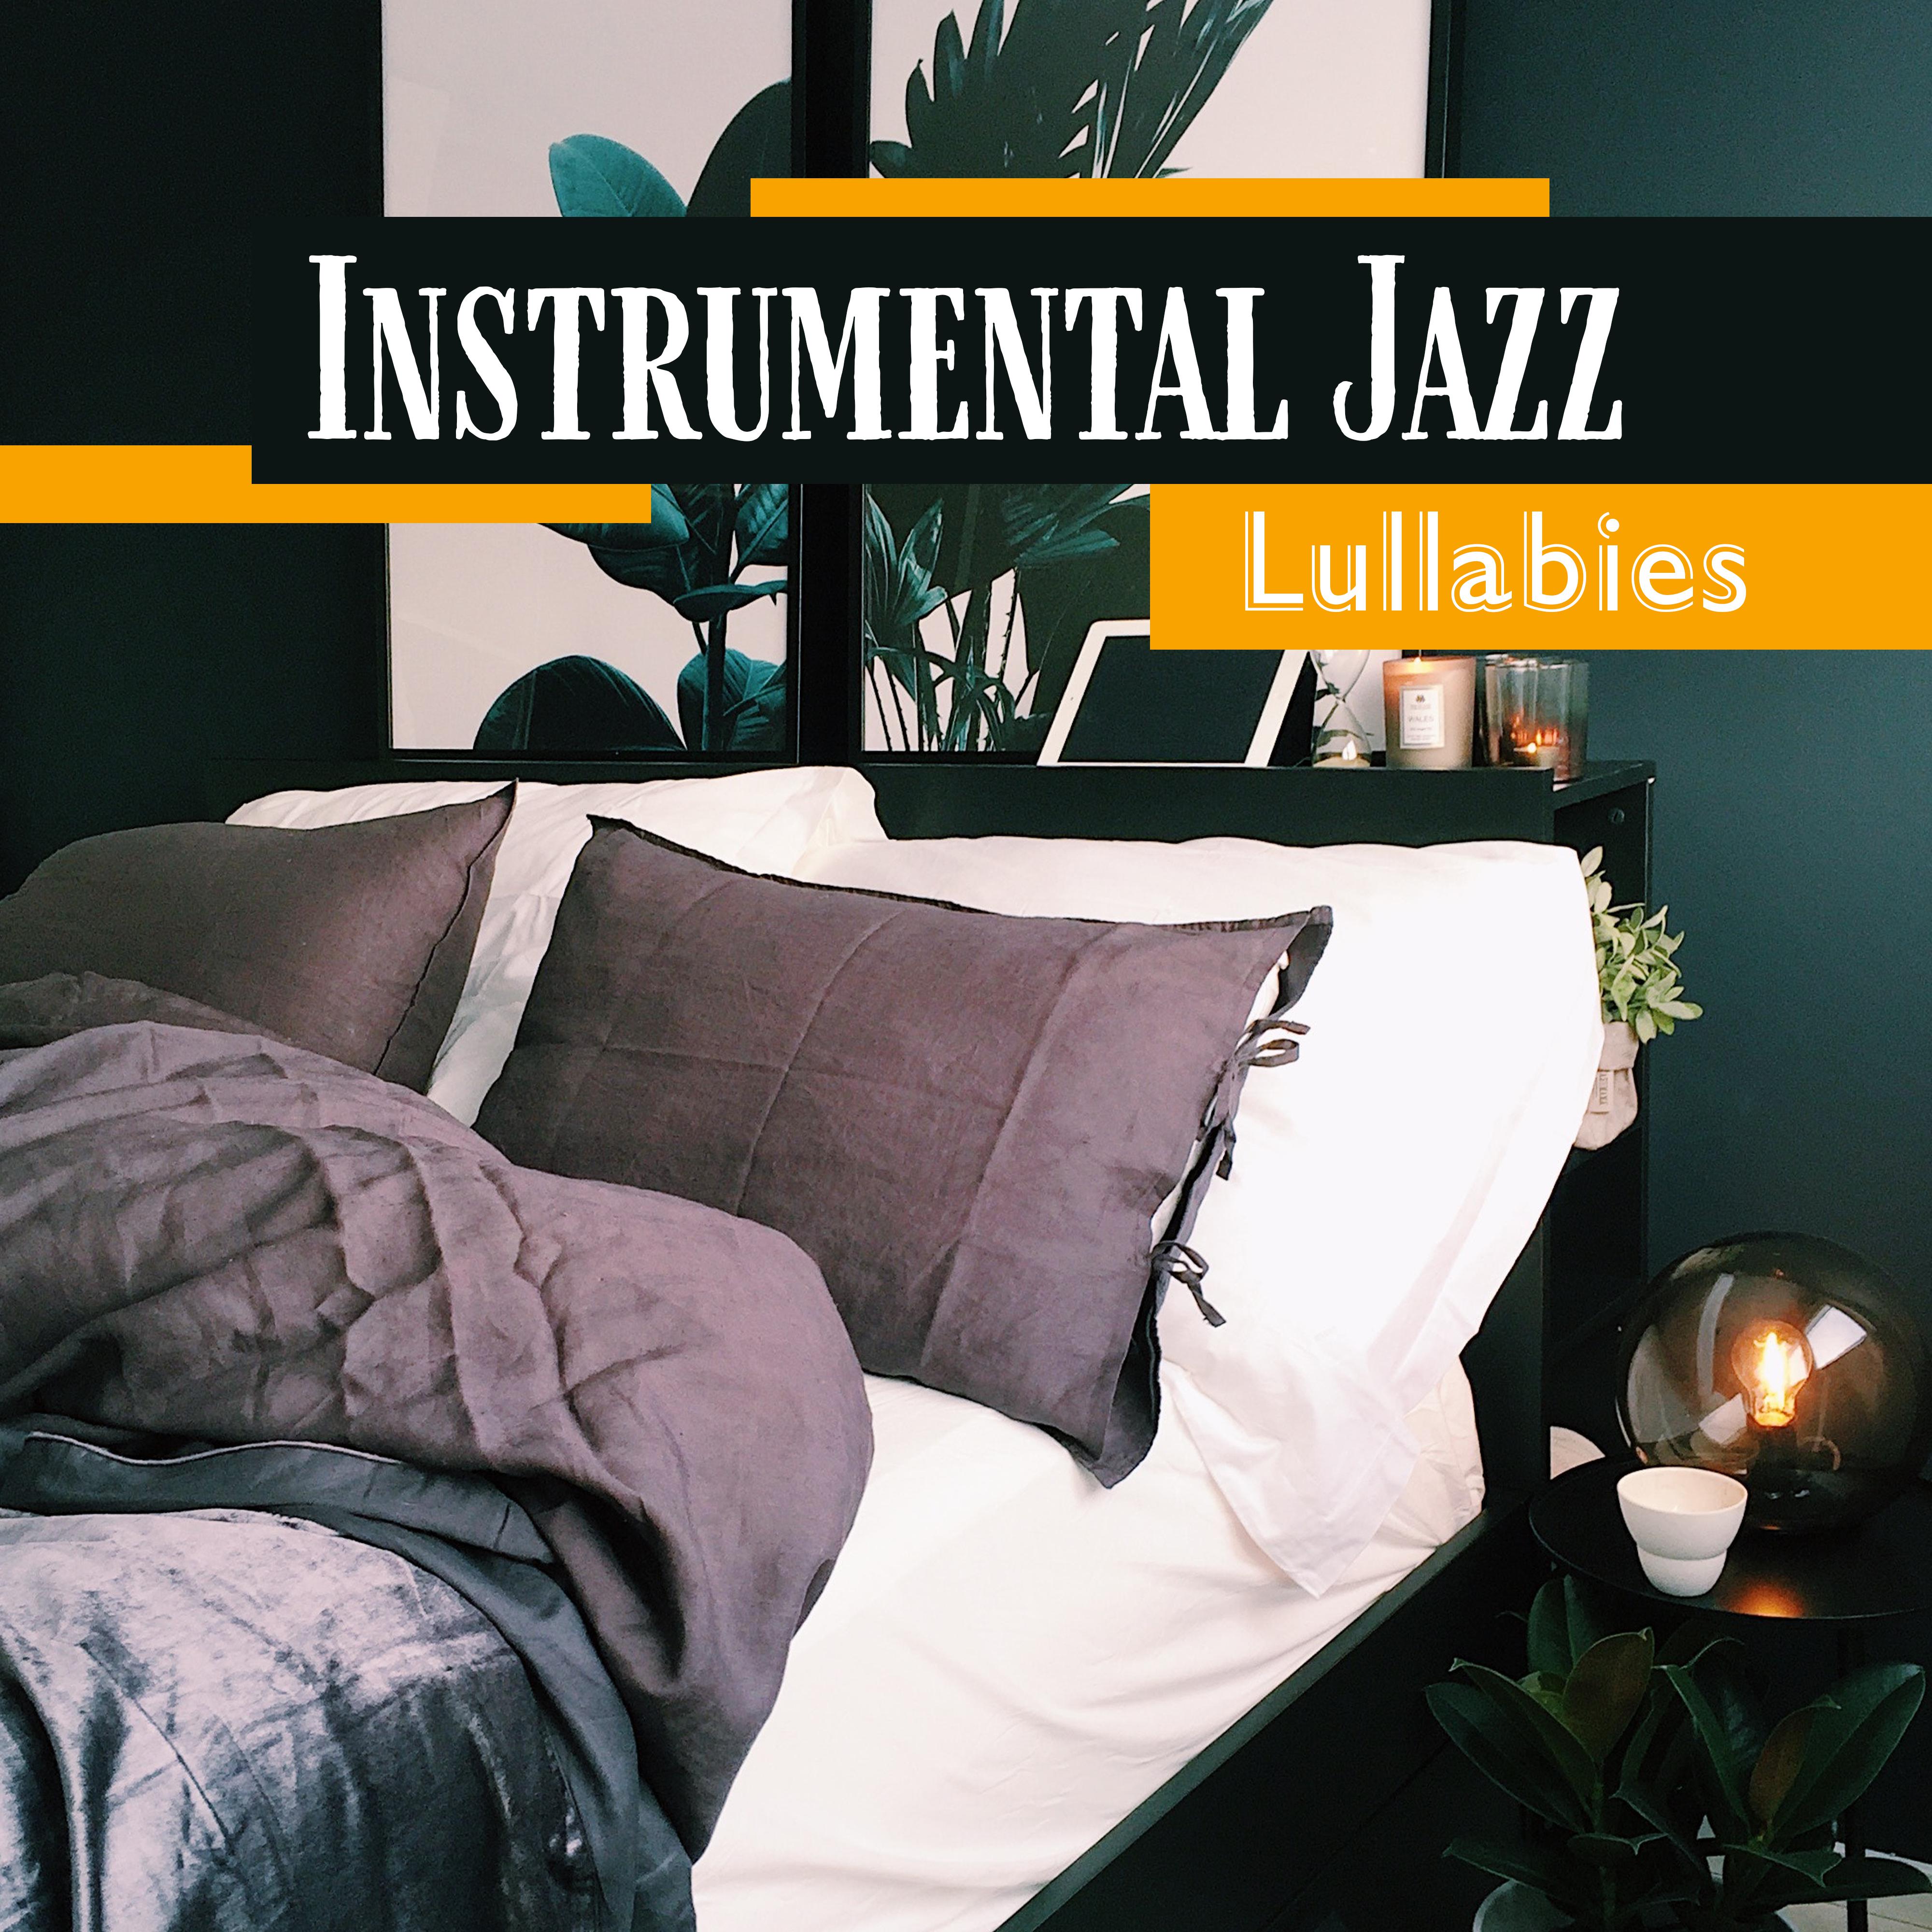 Instrumental Jazz Lullabies - Soothing Music for Sleepless Nights